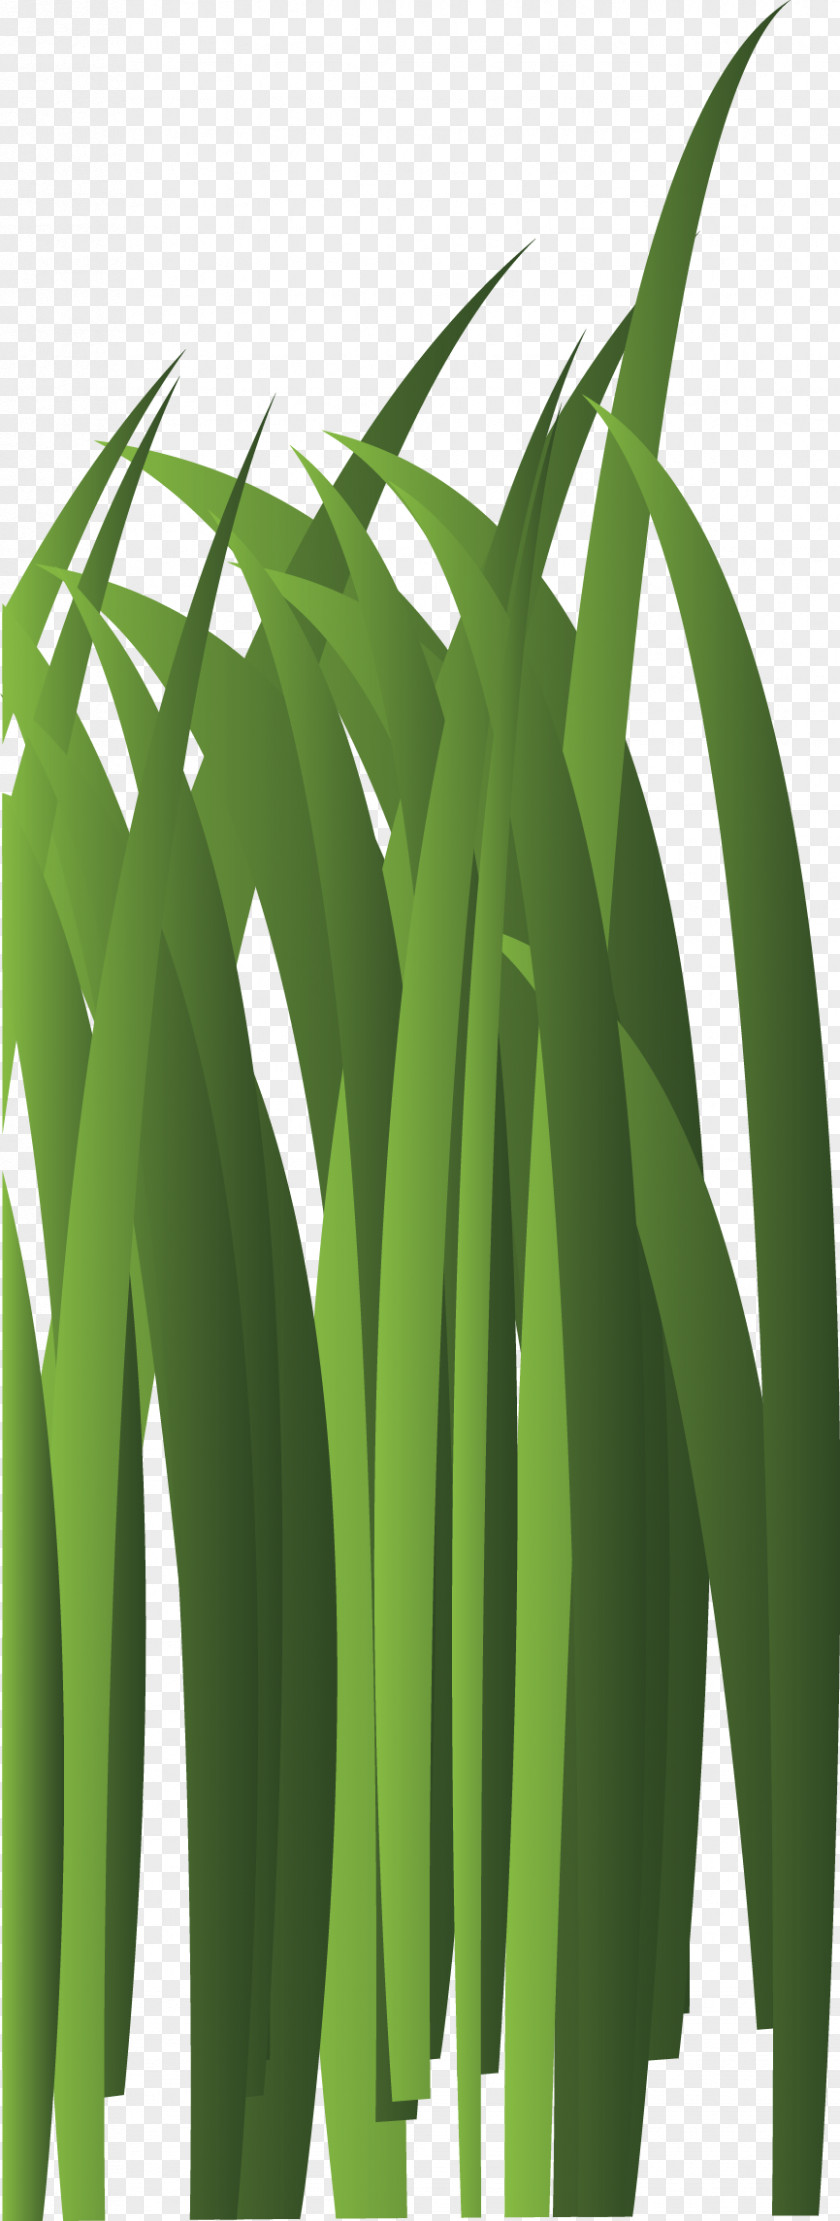 Green Grass Elements Bambusodae Leaf Plant Stem Tree PNG